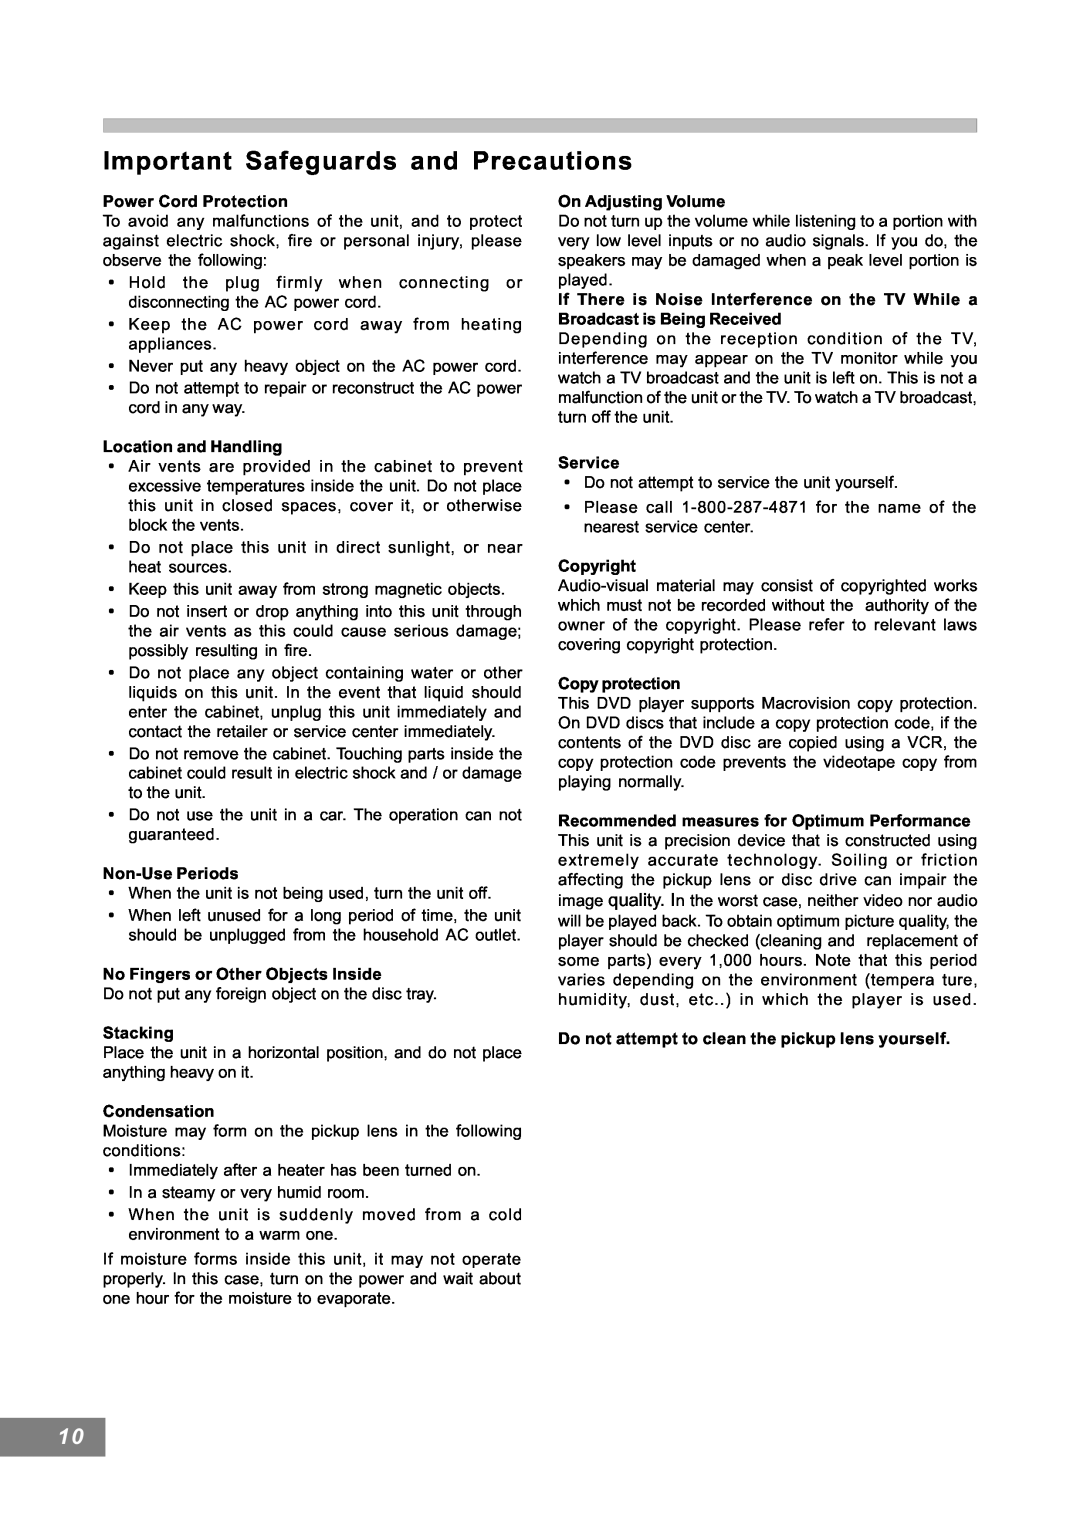 Emerson AV101 manual Important Safeguards and Precautions 